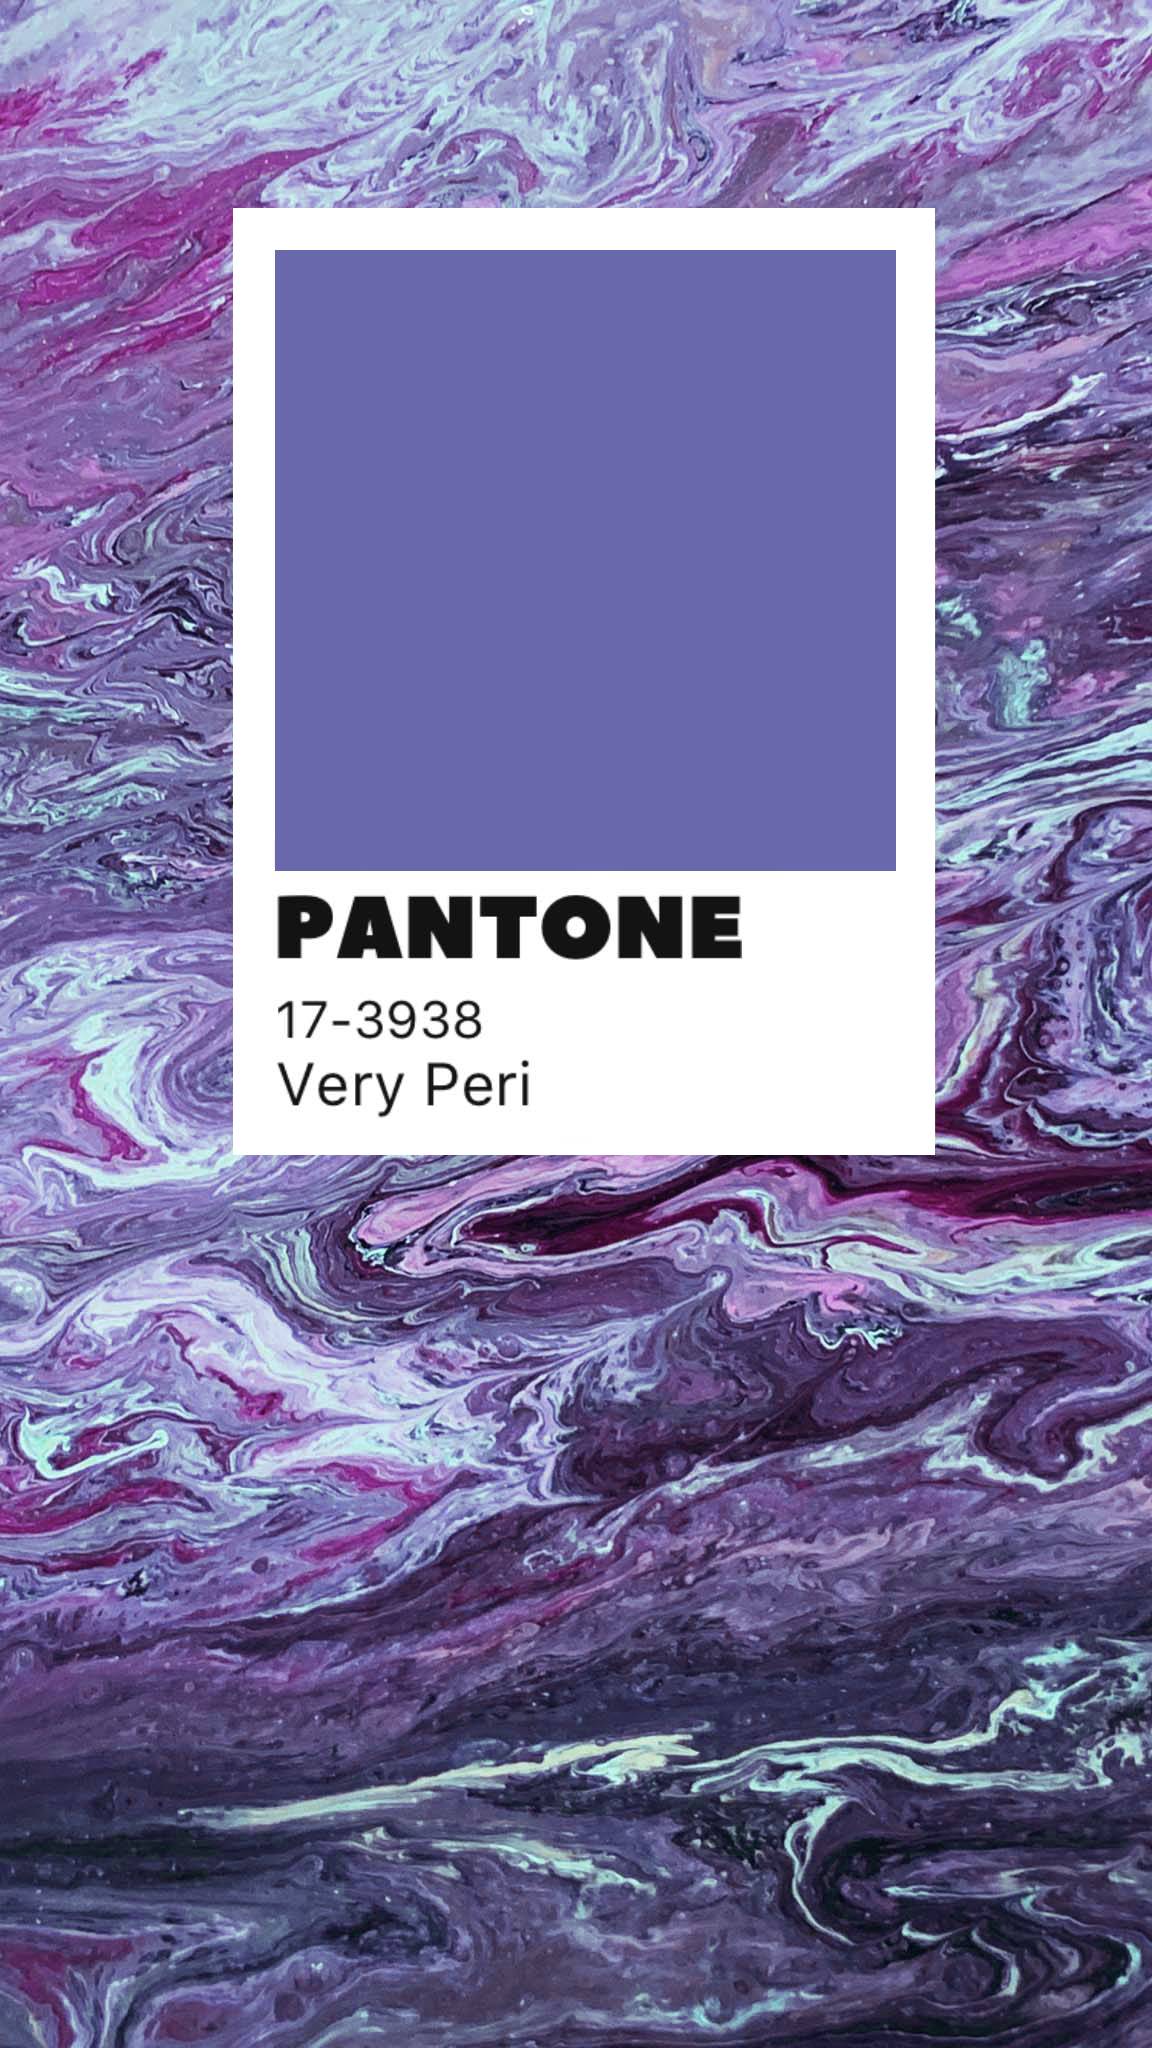 Pantone's color 2022 – Very Peri